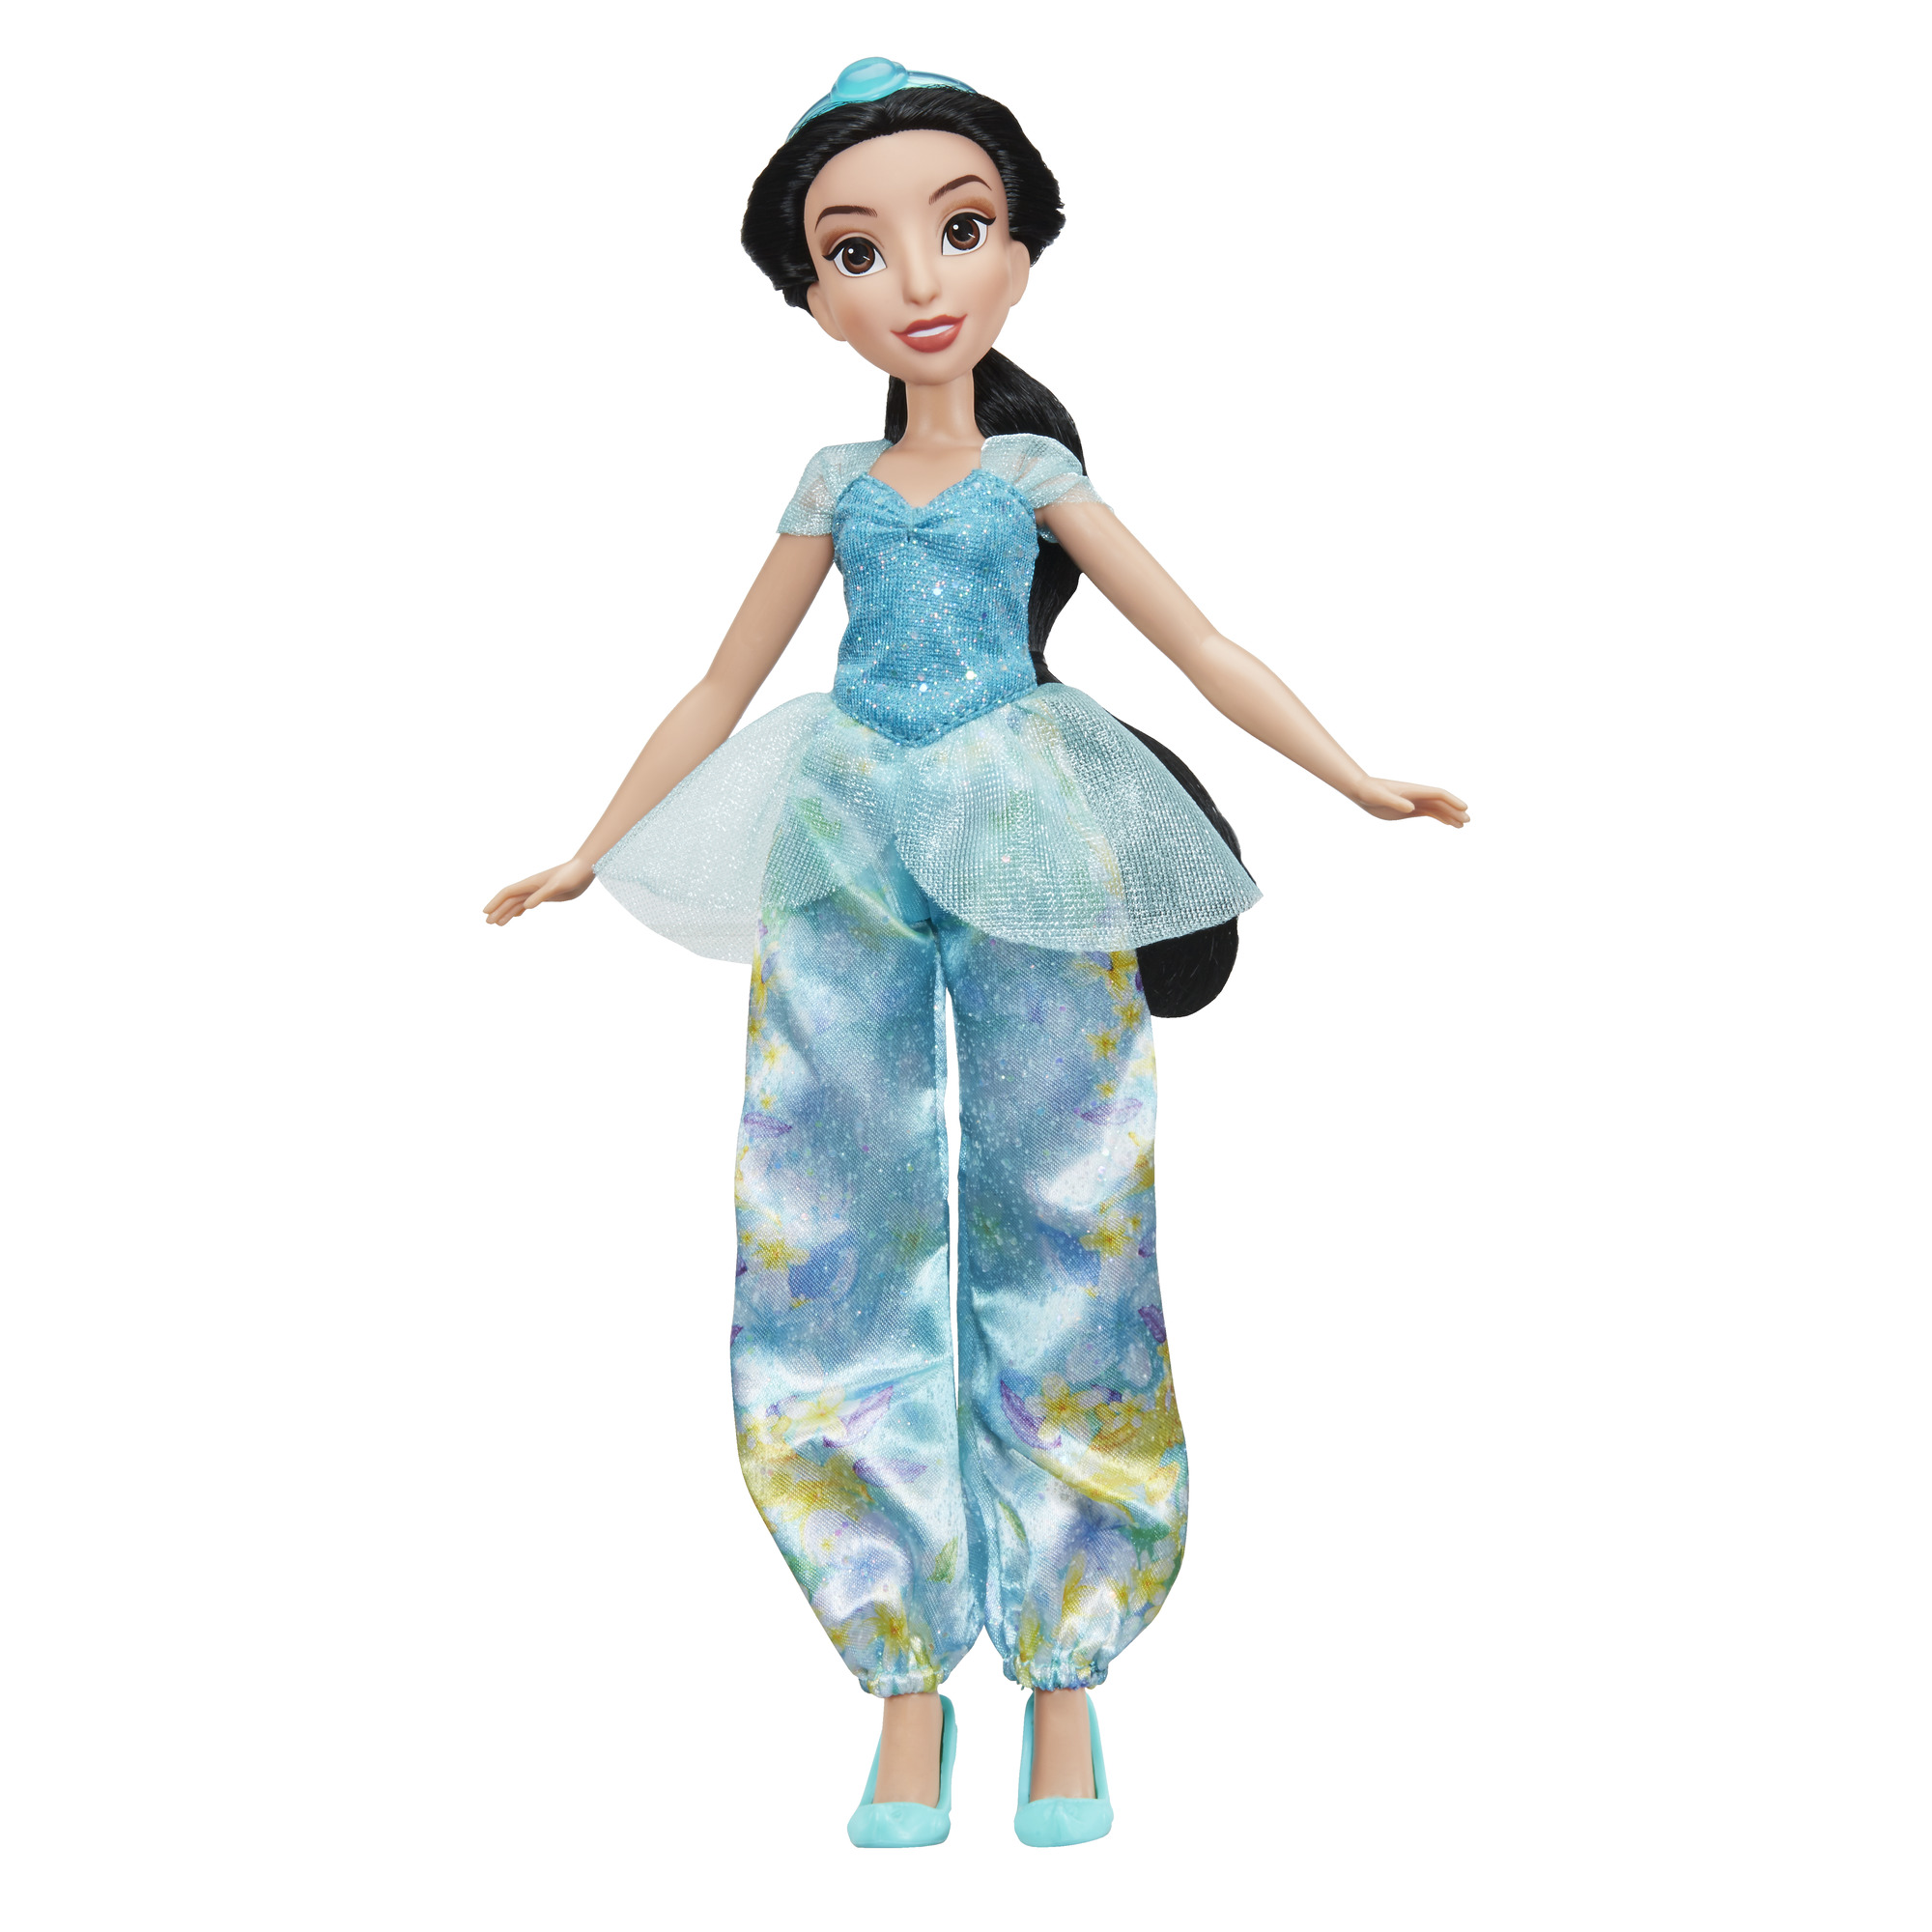 Disney Princess Royal Shimmer Jasmine Doll, Ages 3 and Up - image 1 of 7